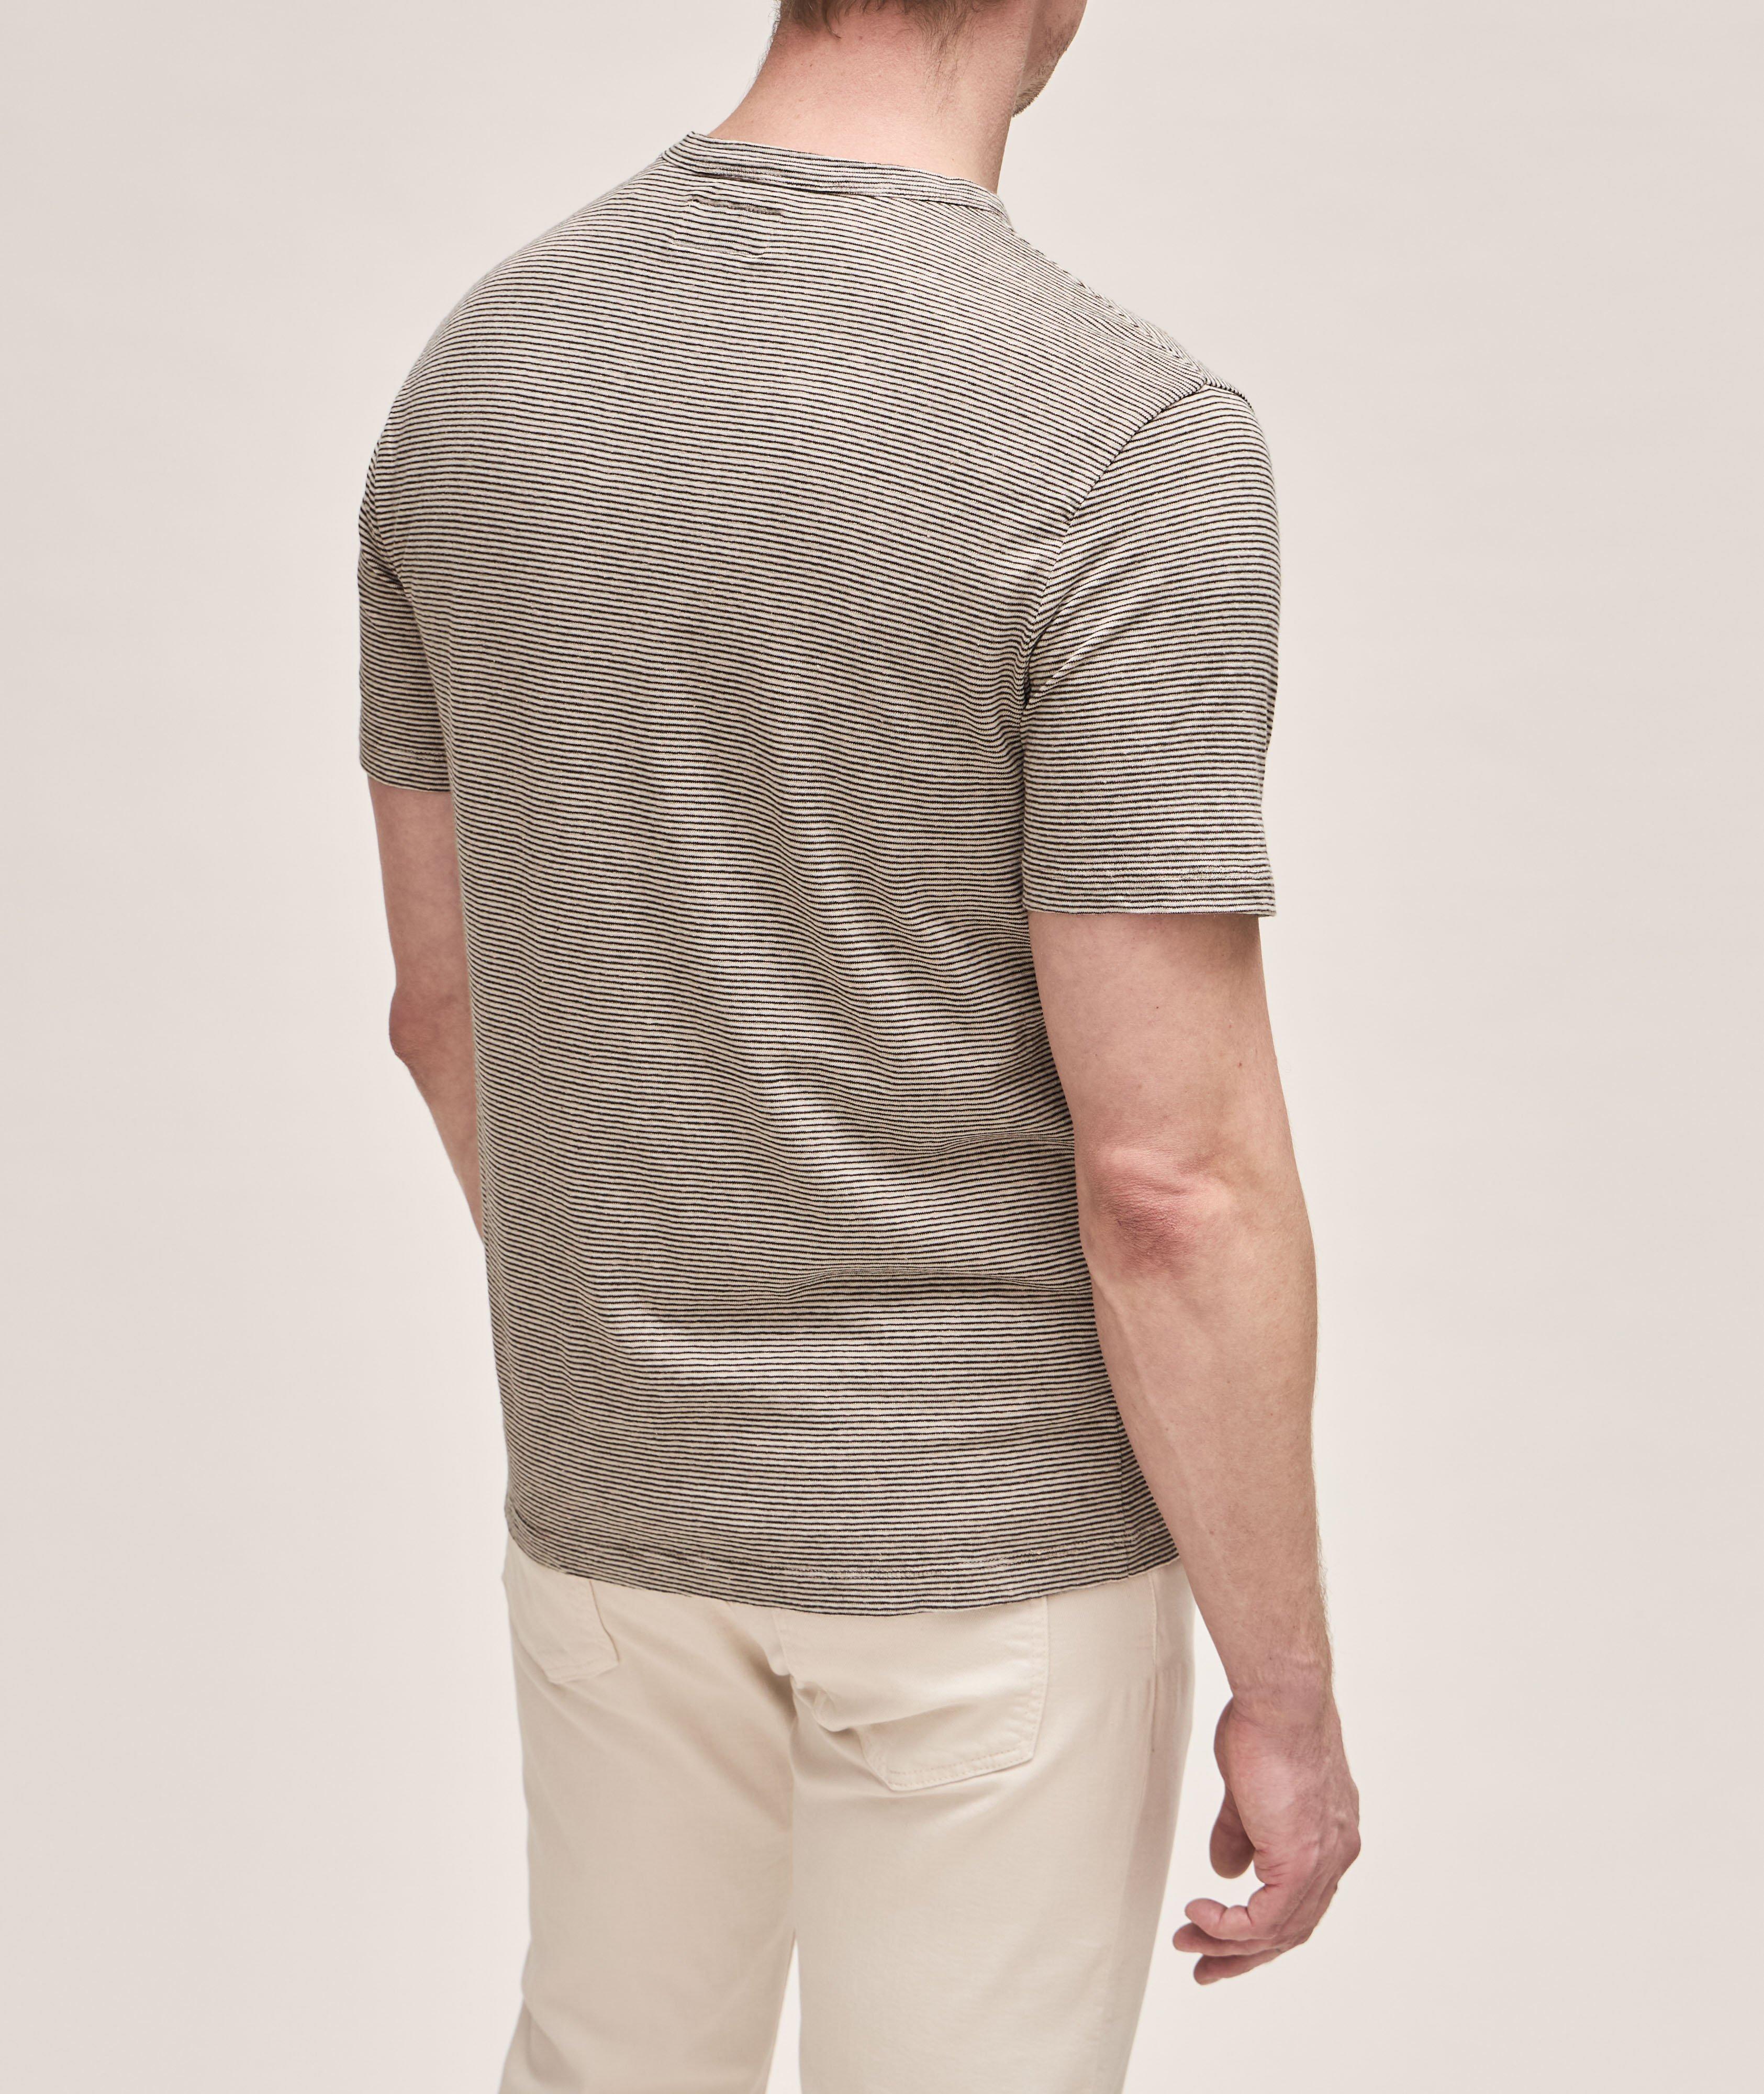 Thin Vertical Striped Cotton-Linen T-Shirt  image 2